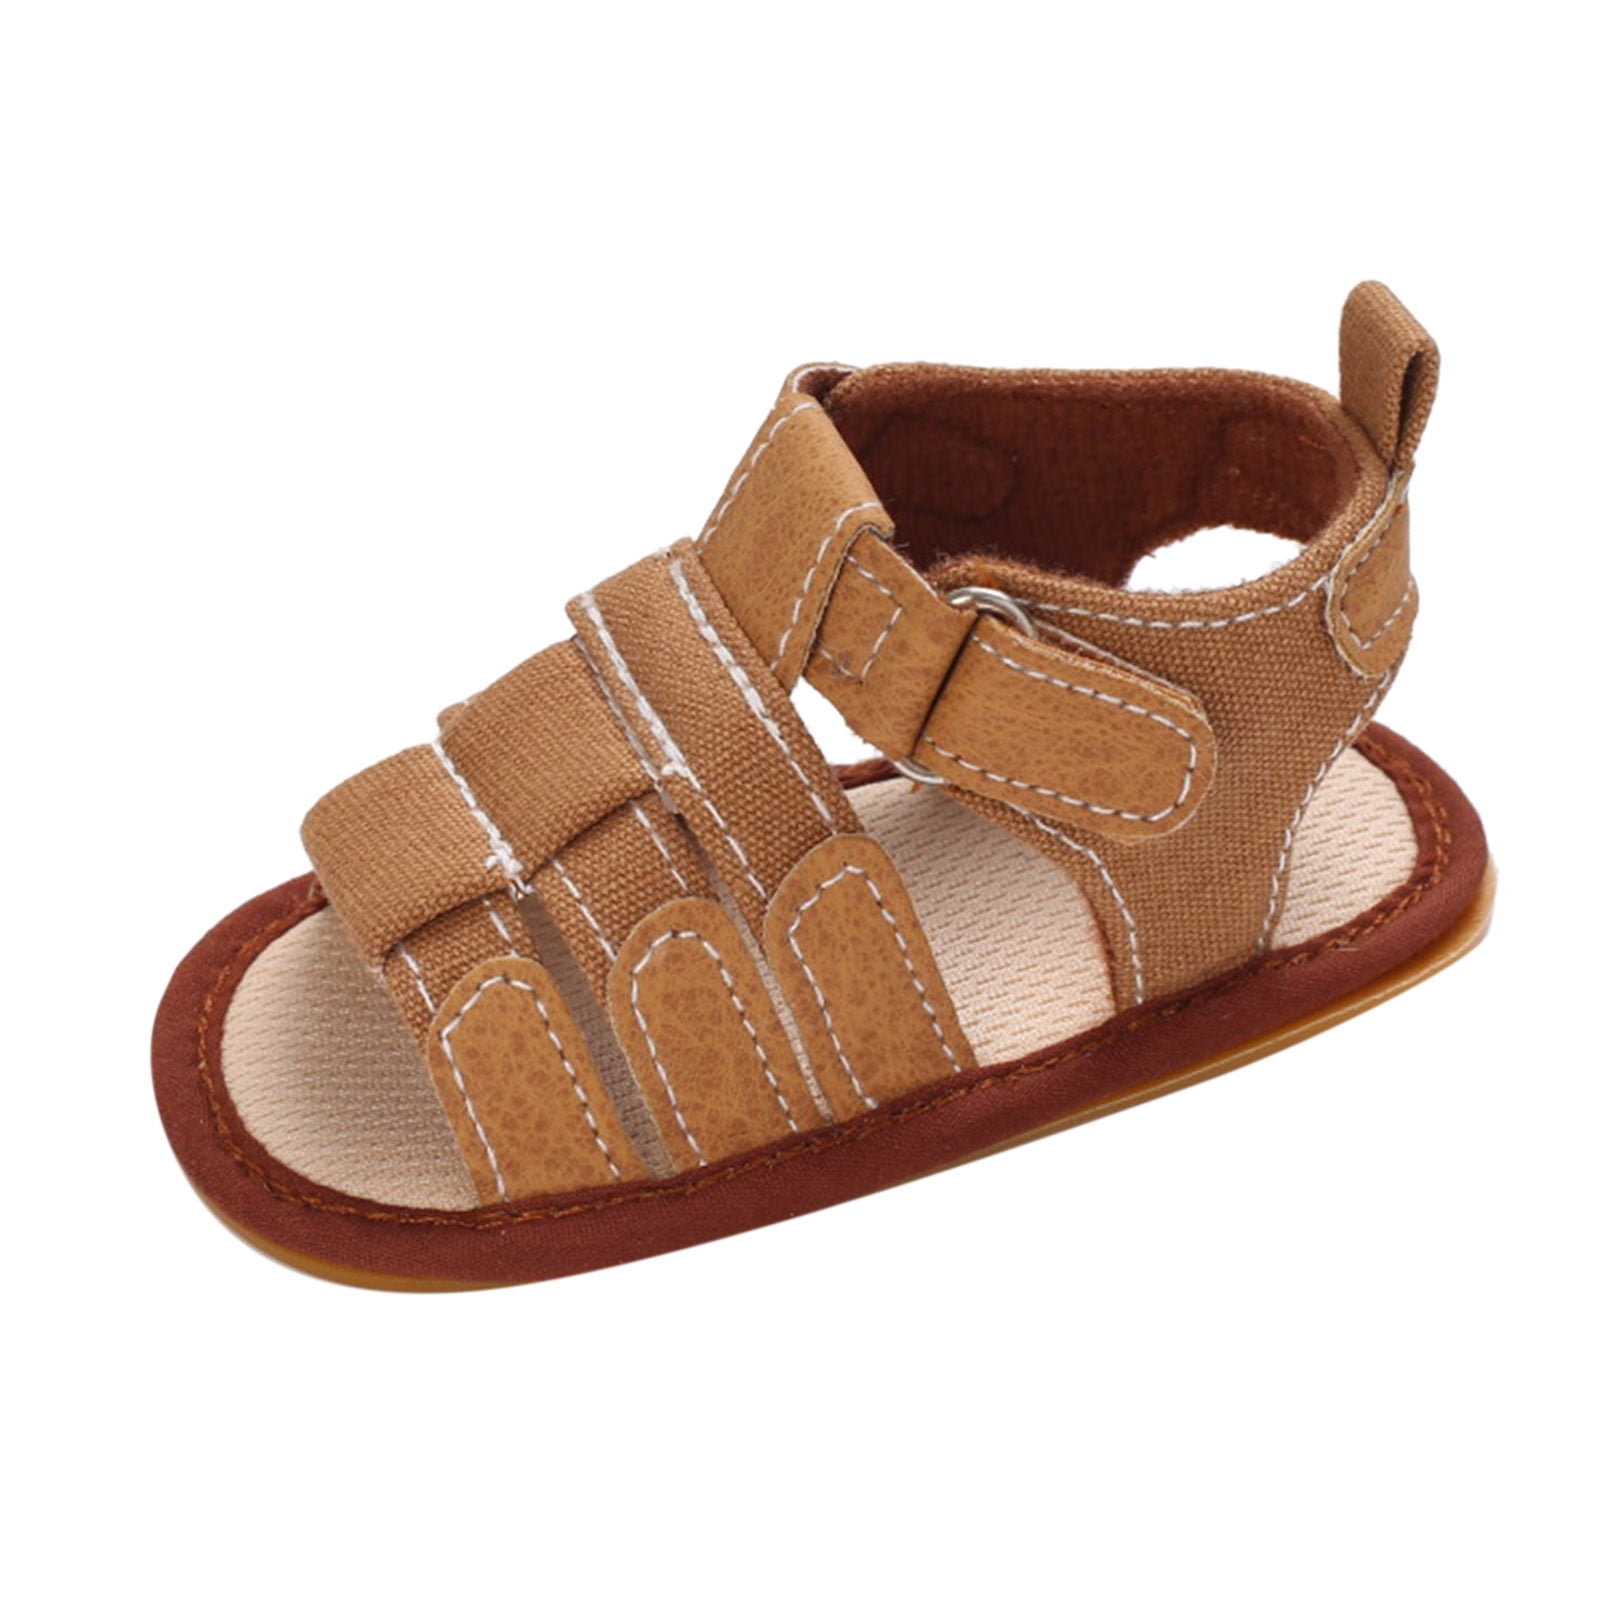 Baby Boy Sandal leather Brown for newborn present – Elephantito